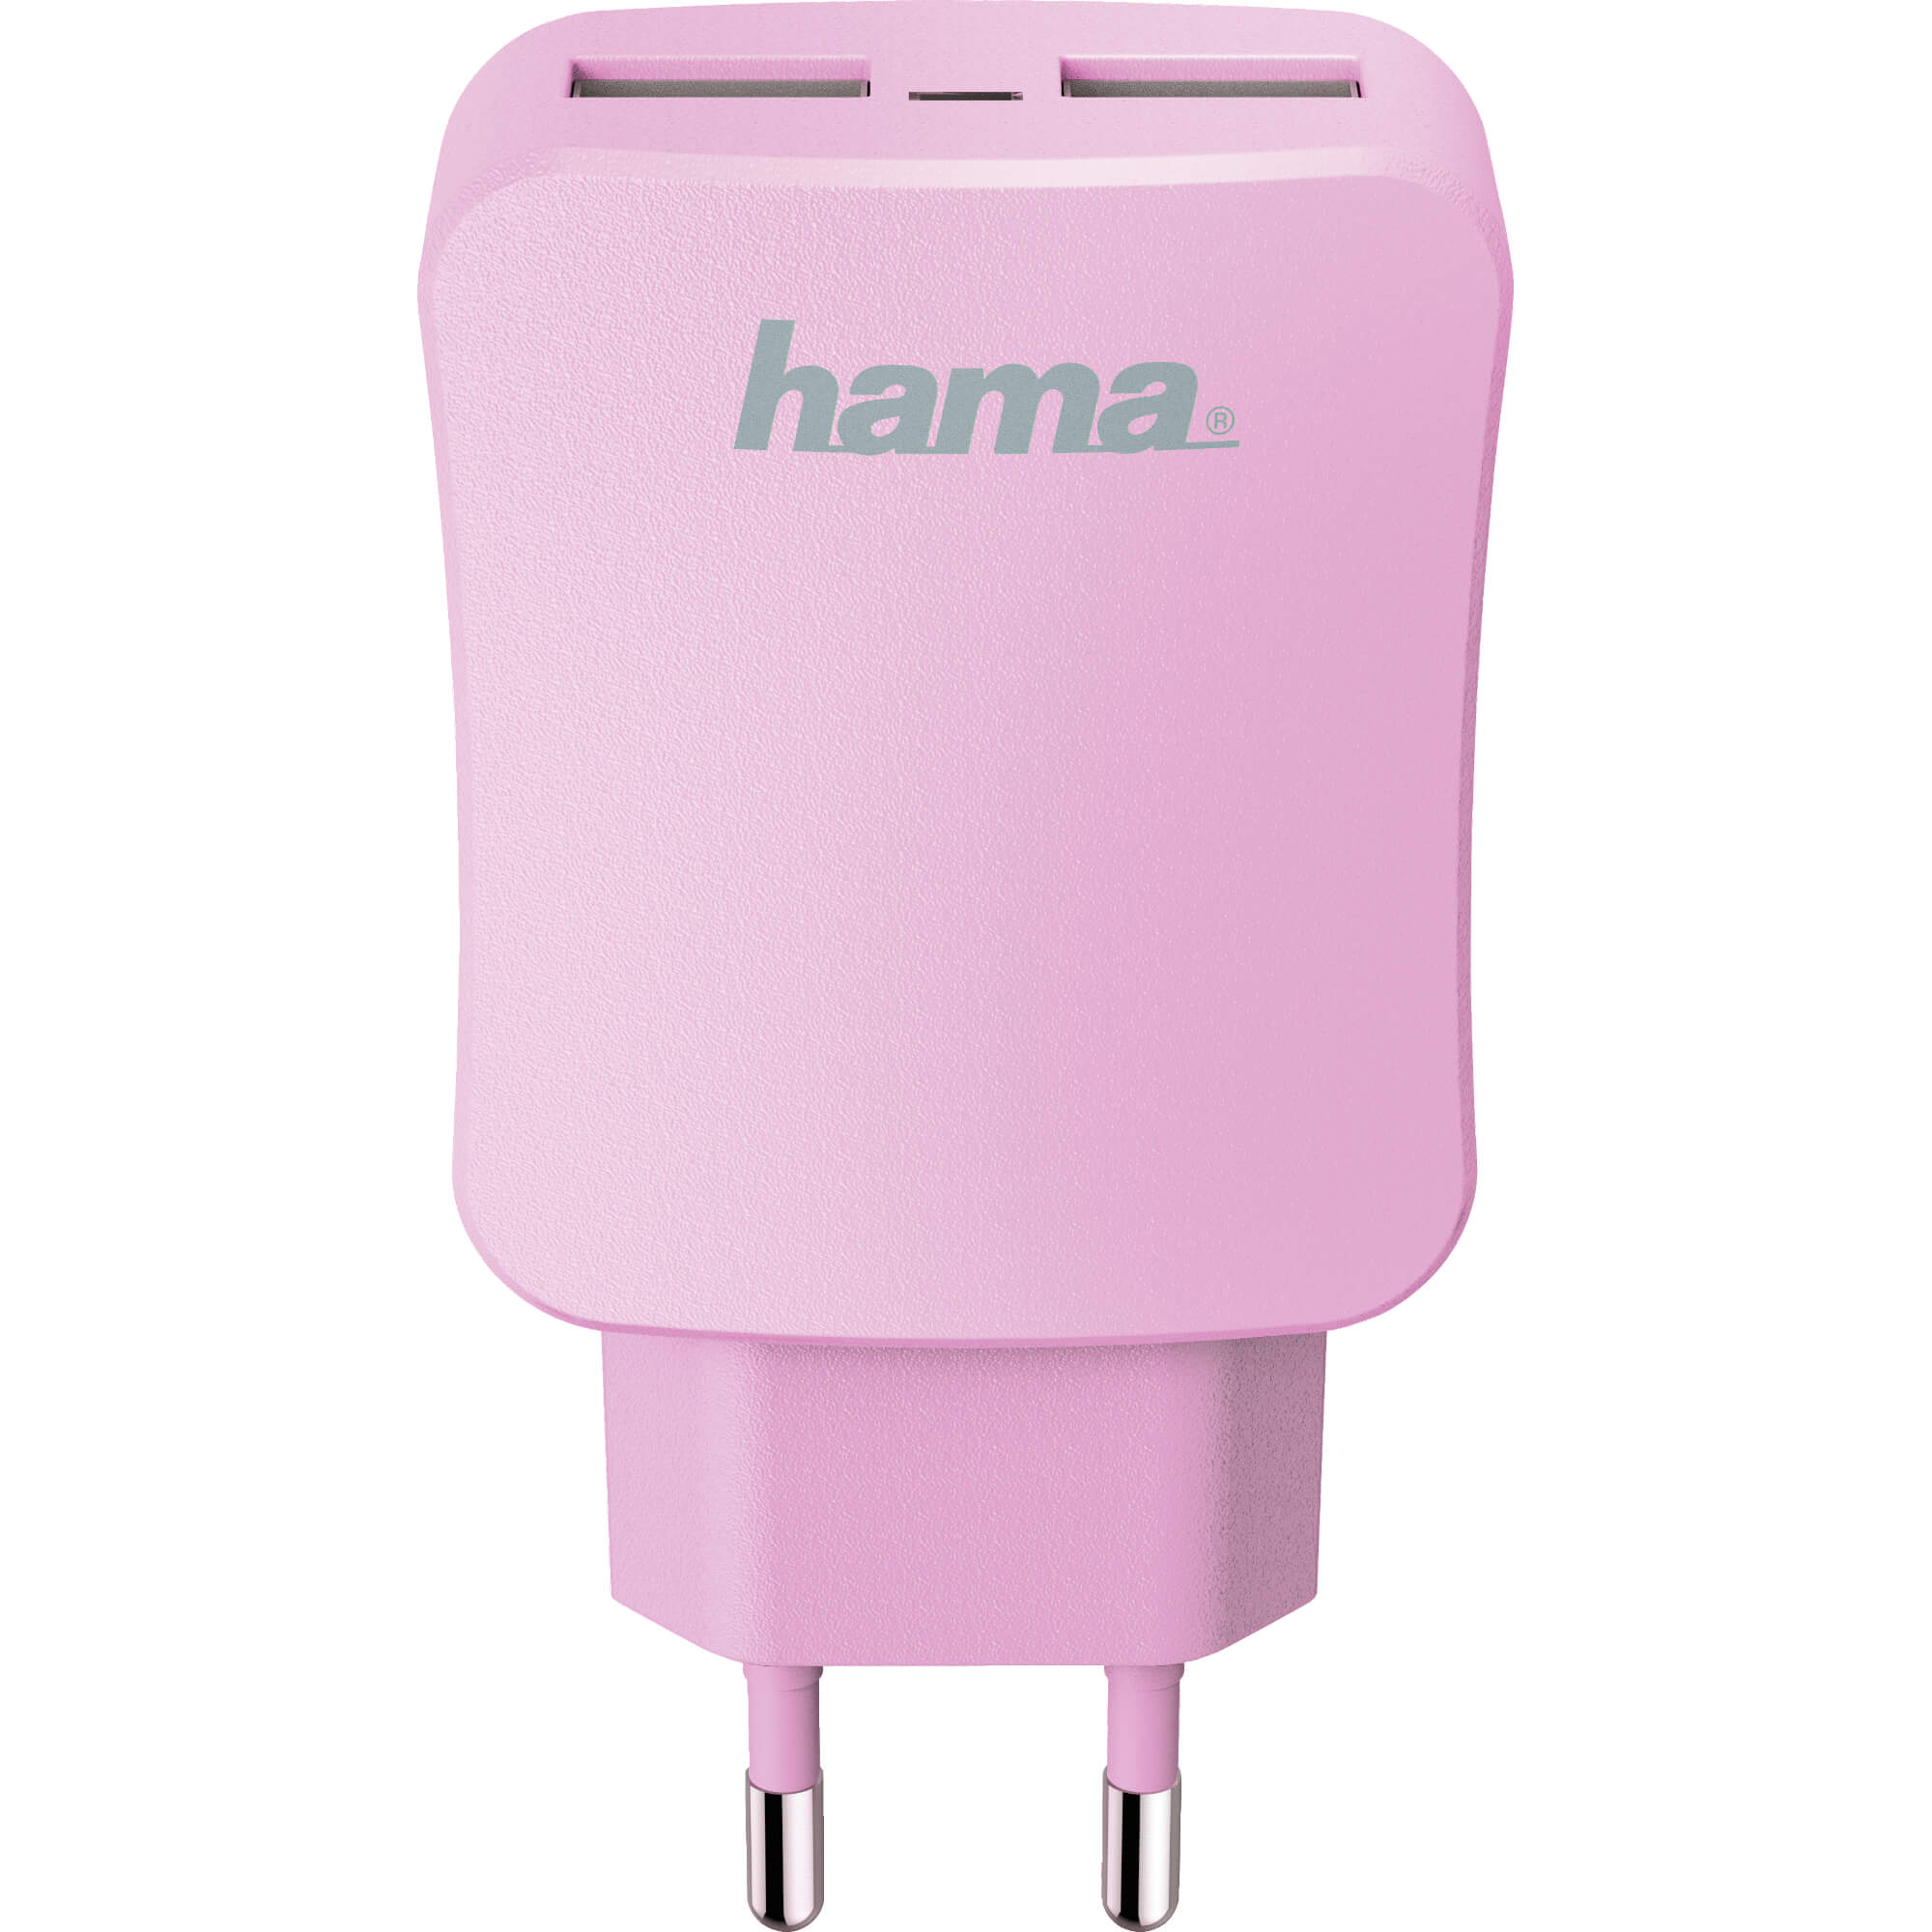  Incarcator retea Hama 178214, Dual USB, Roz 